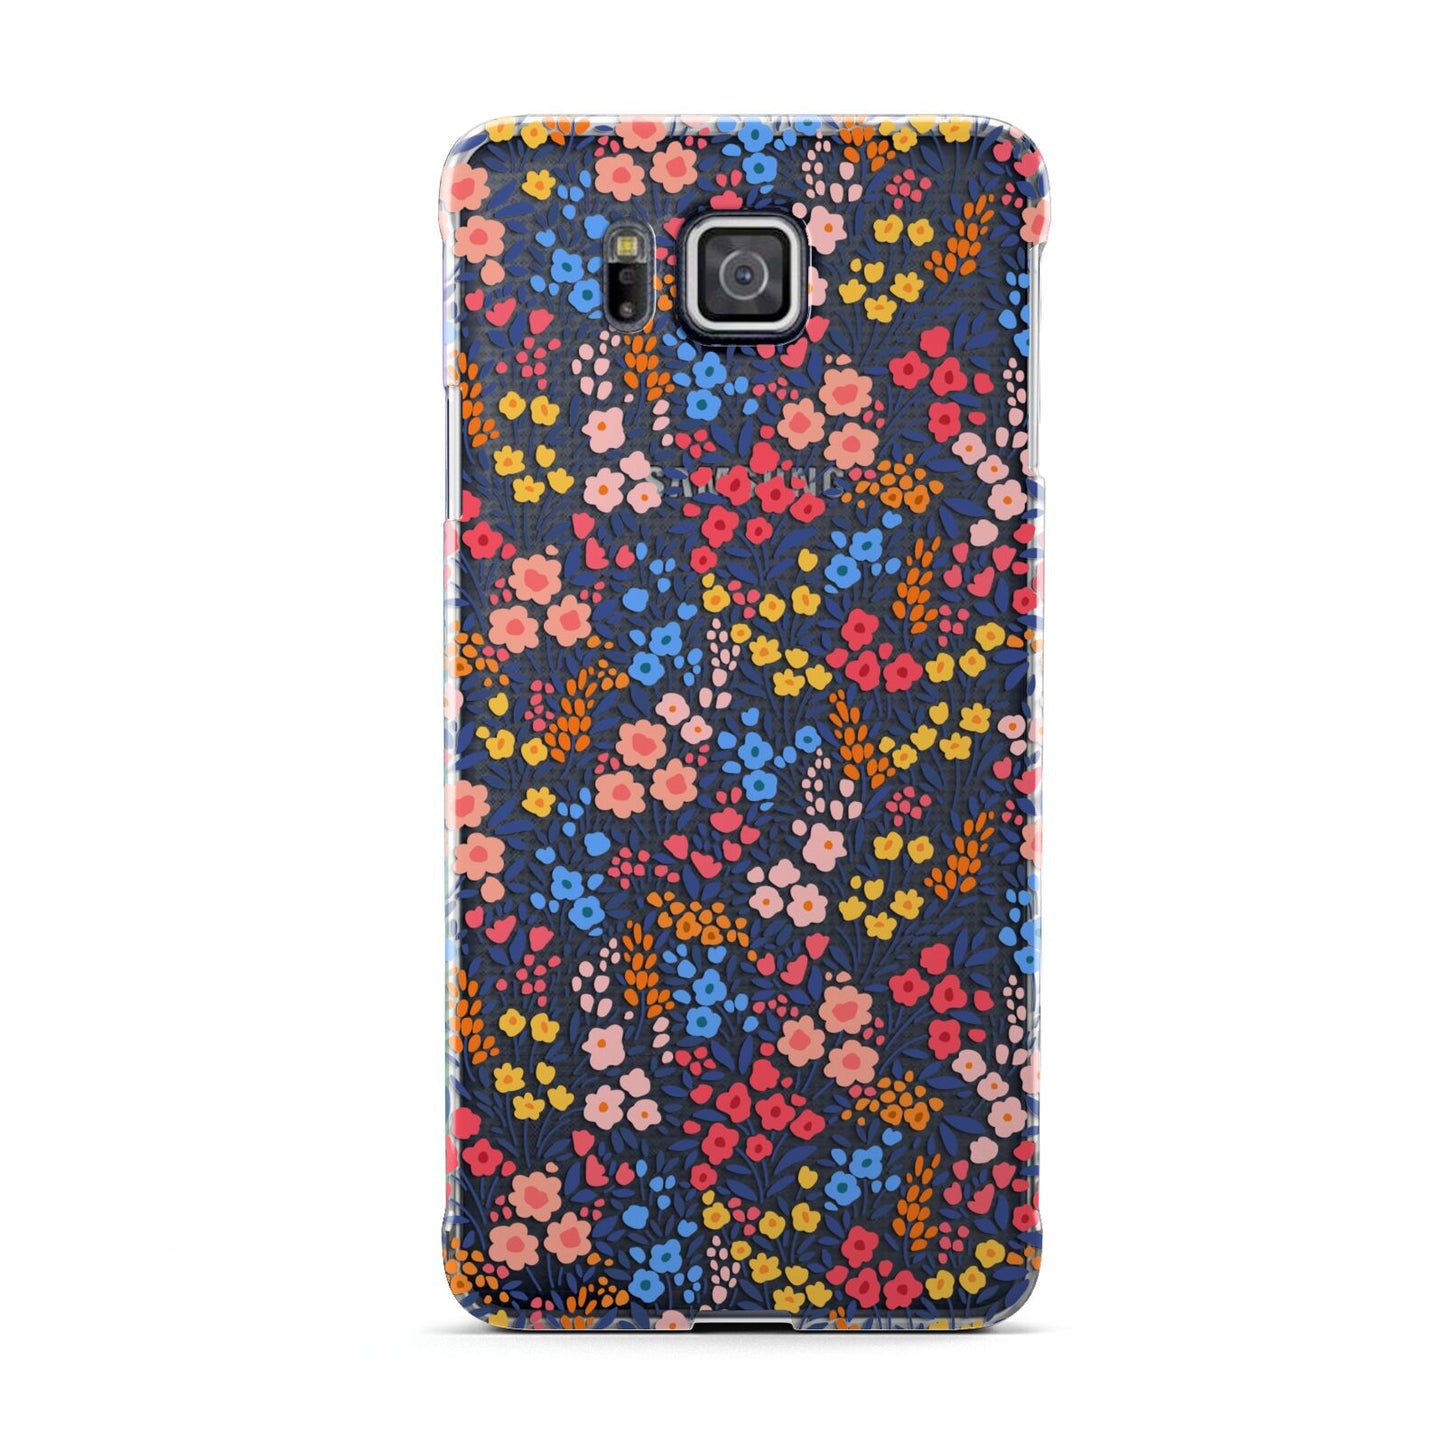 Small Flowers Samsung Galaxy Alpha Case